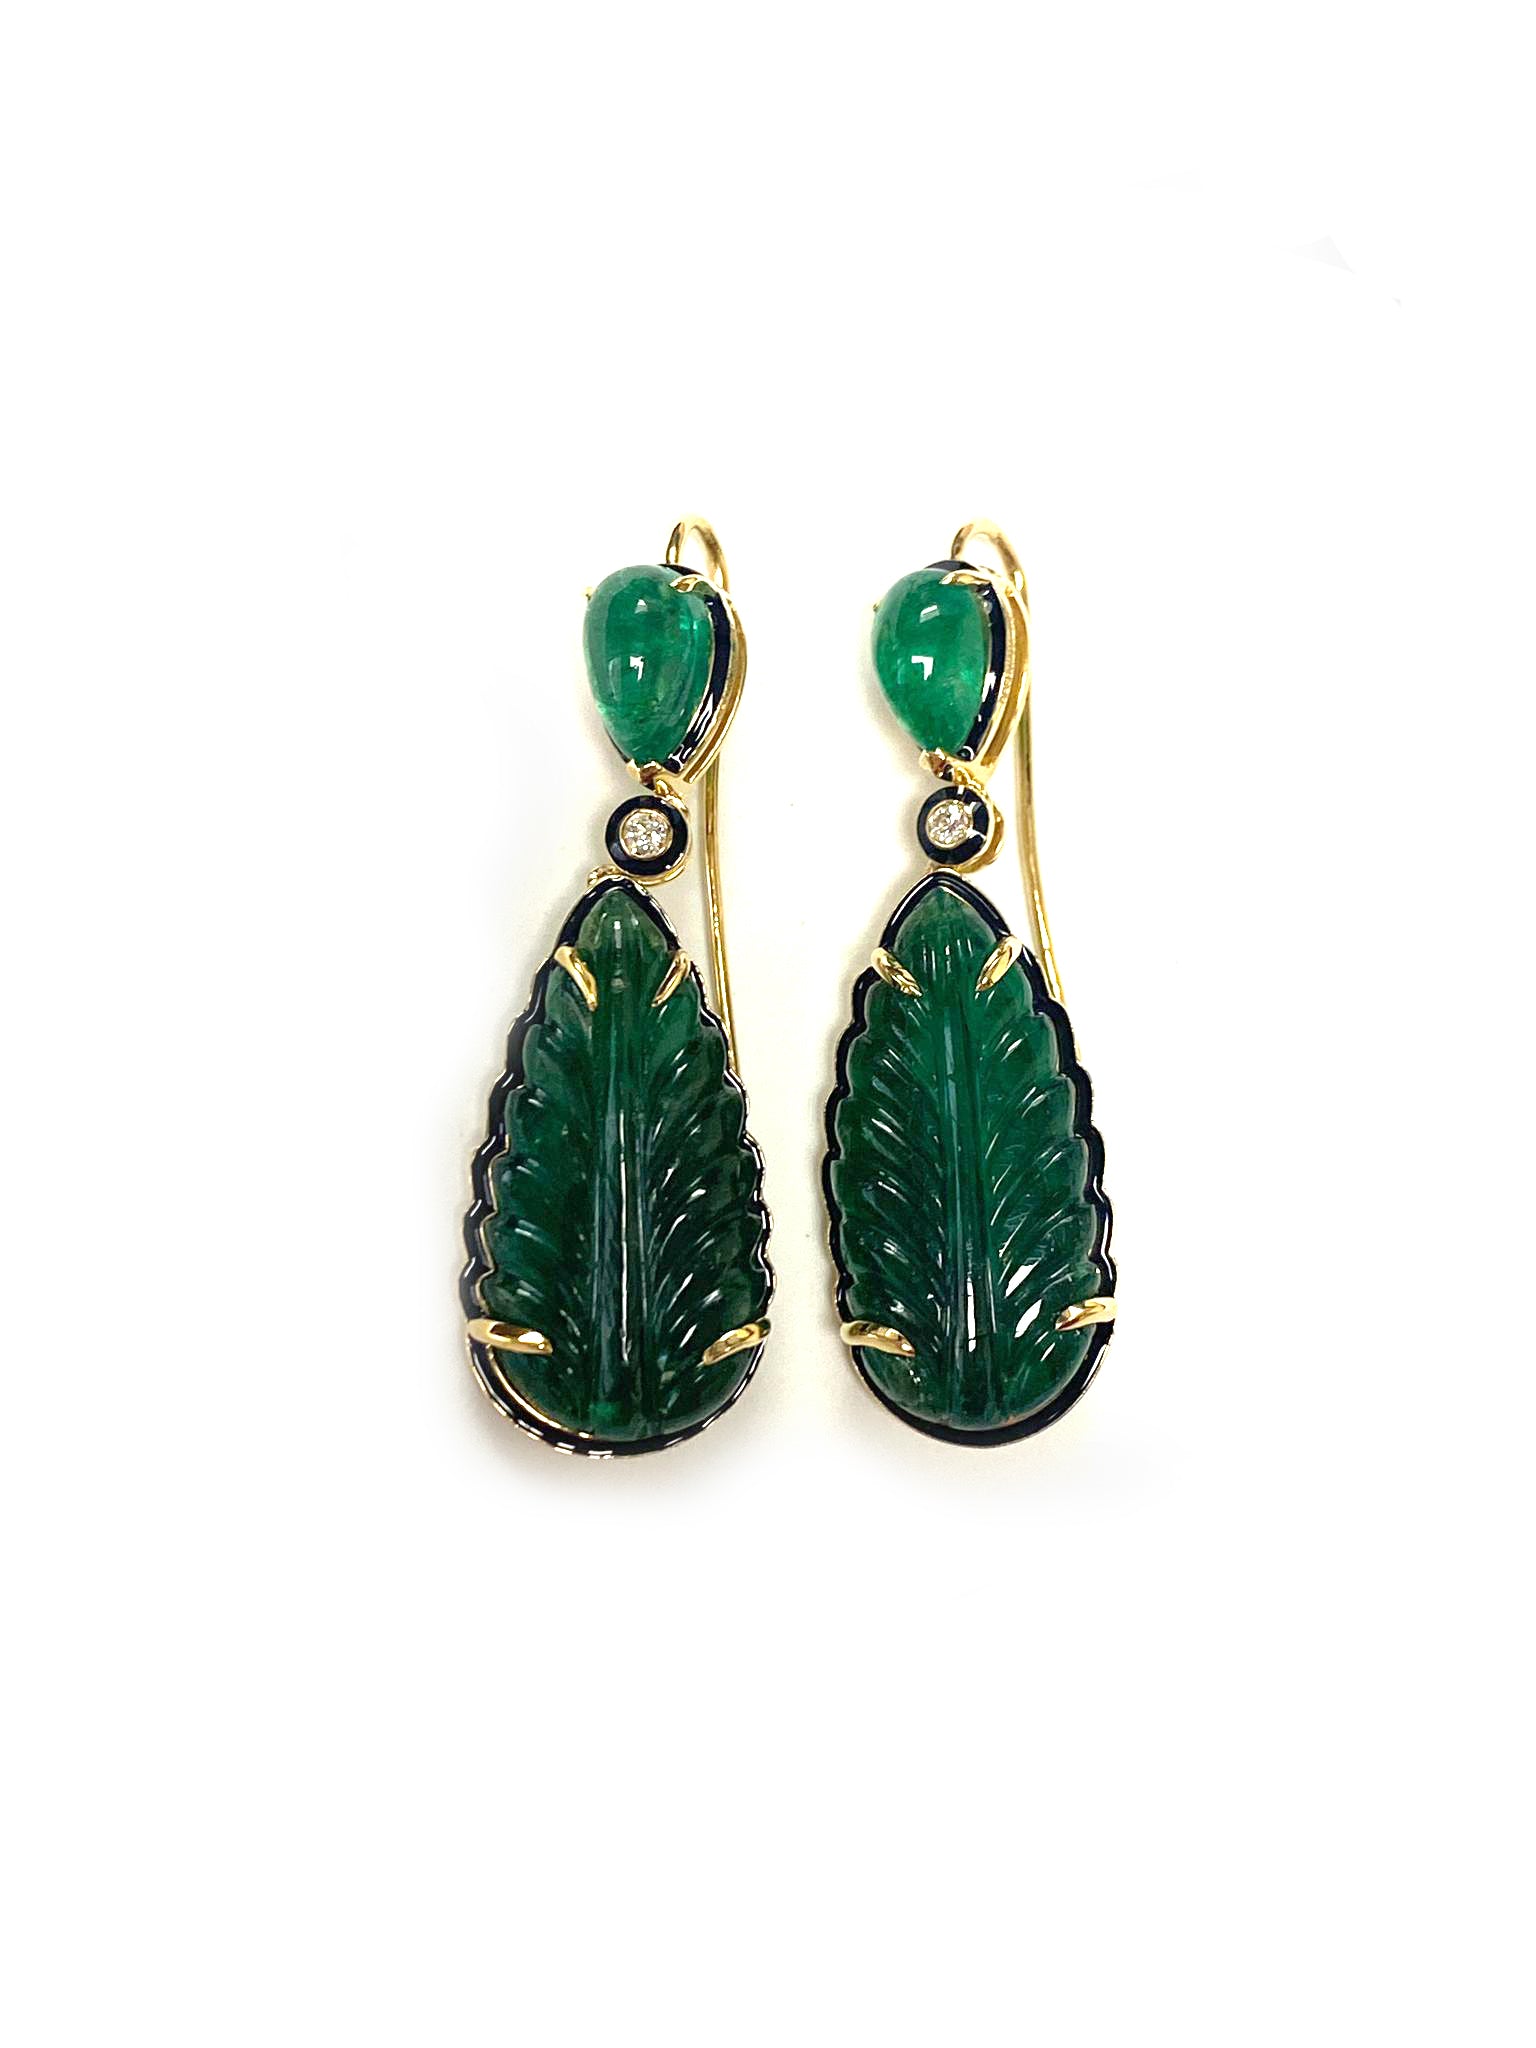 G-One Carved Emerald Leaf Earrings Earrings Goshwara   